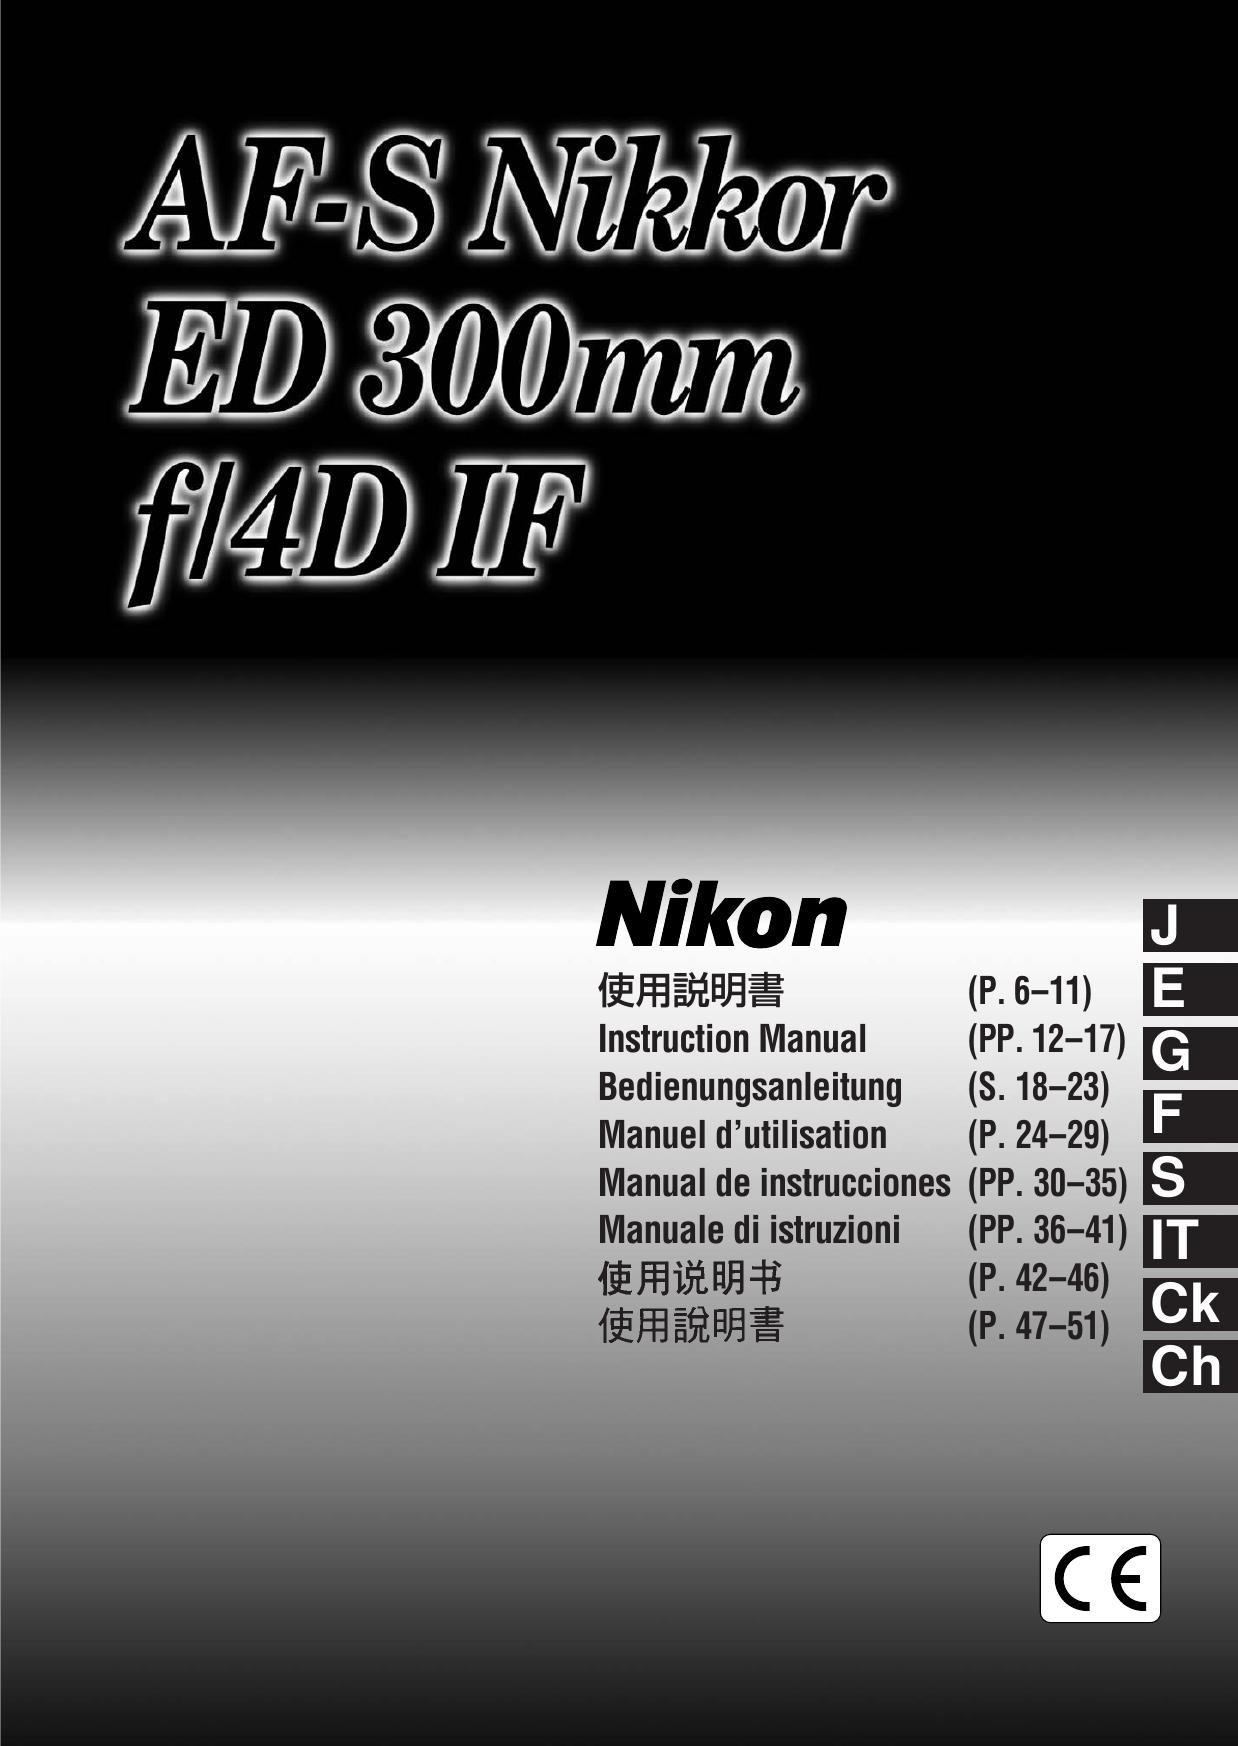 Nikon 1909 Camera Lens User Manual